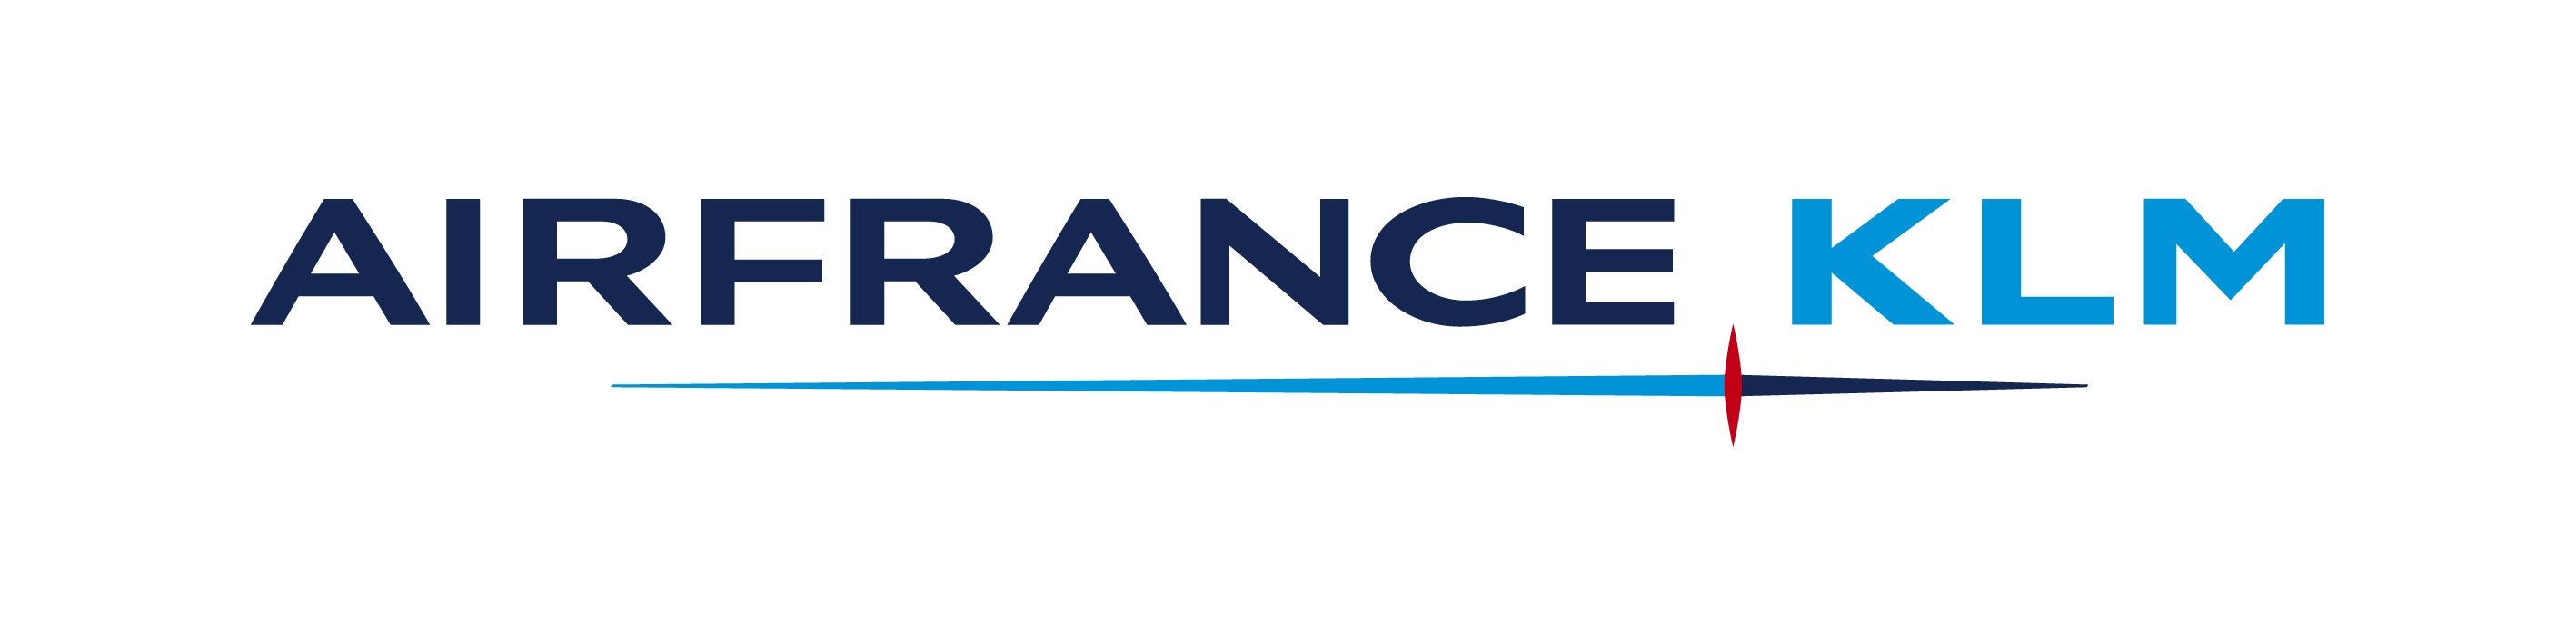 Air France Klm Logo Transparent Image - Air France Klm, Transparent background PNG HD thumbnail